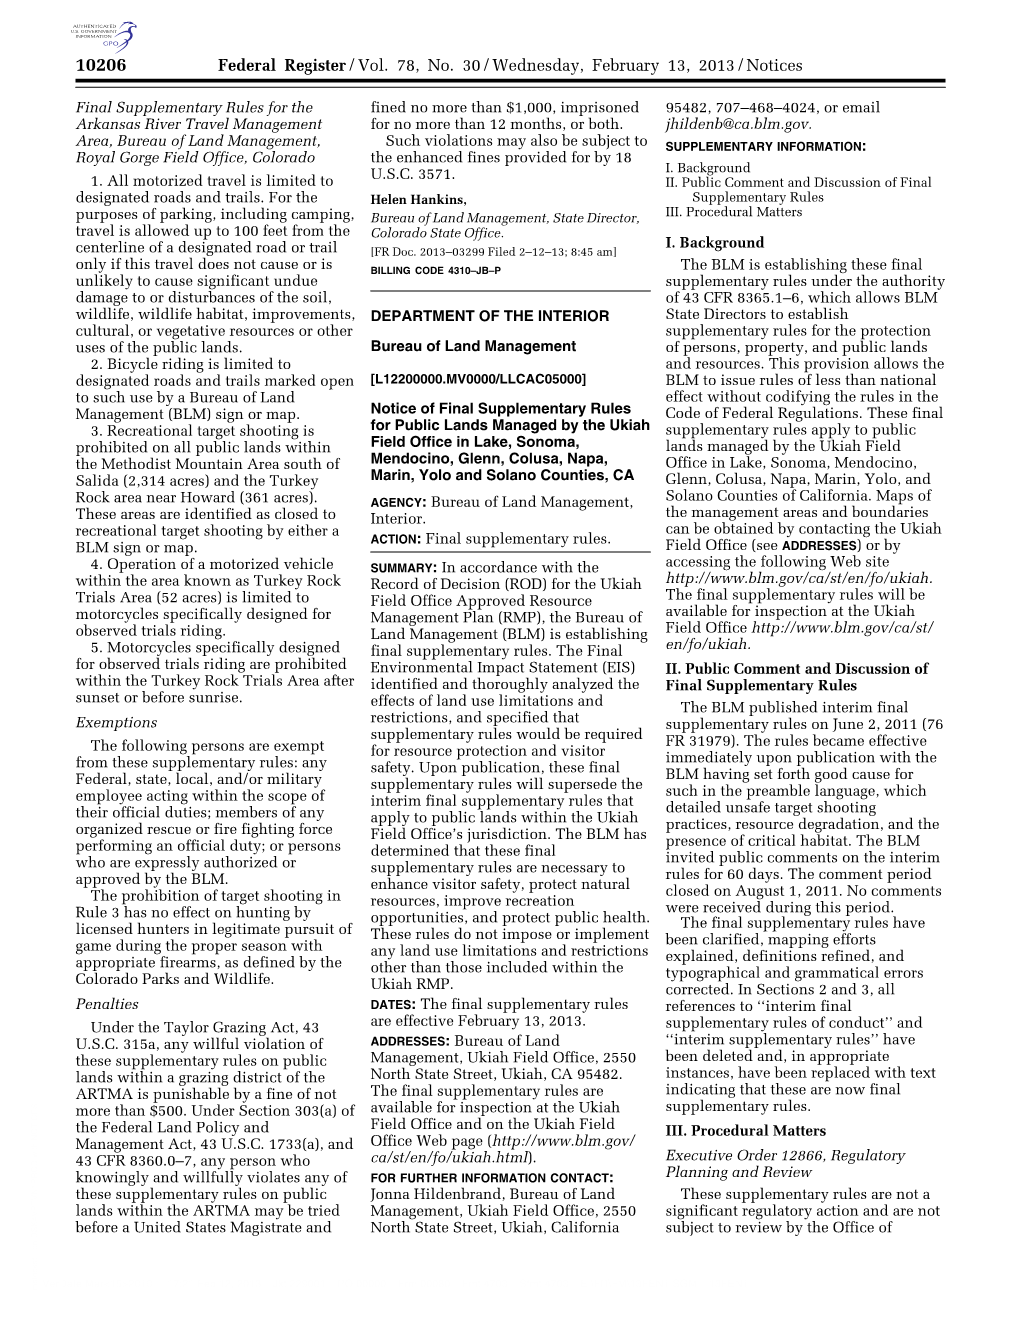 Federal Register/Vol. 78, No. 30/Wednesday, February 13, 2013/Notices